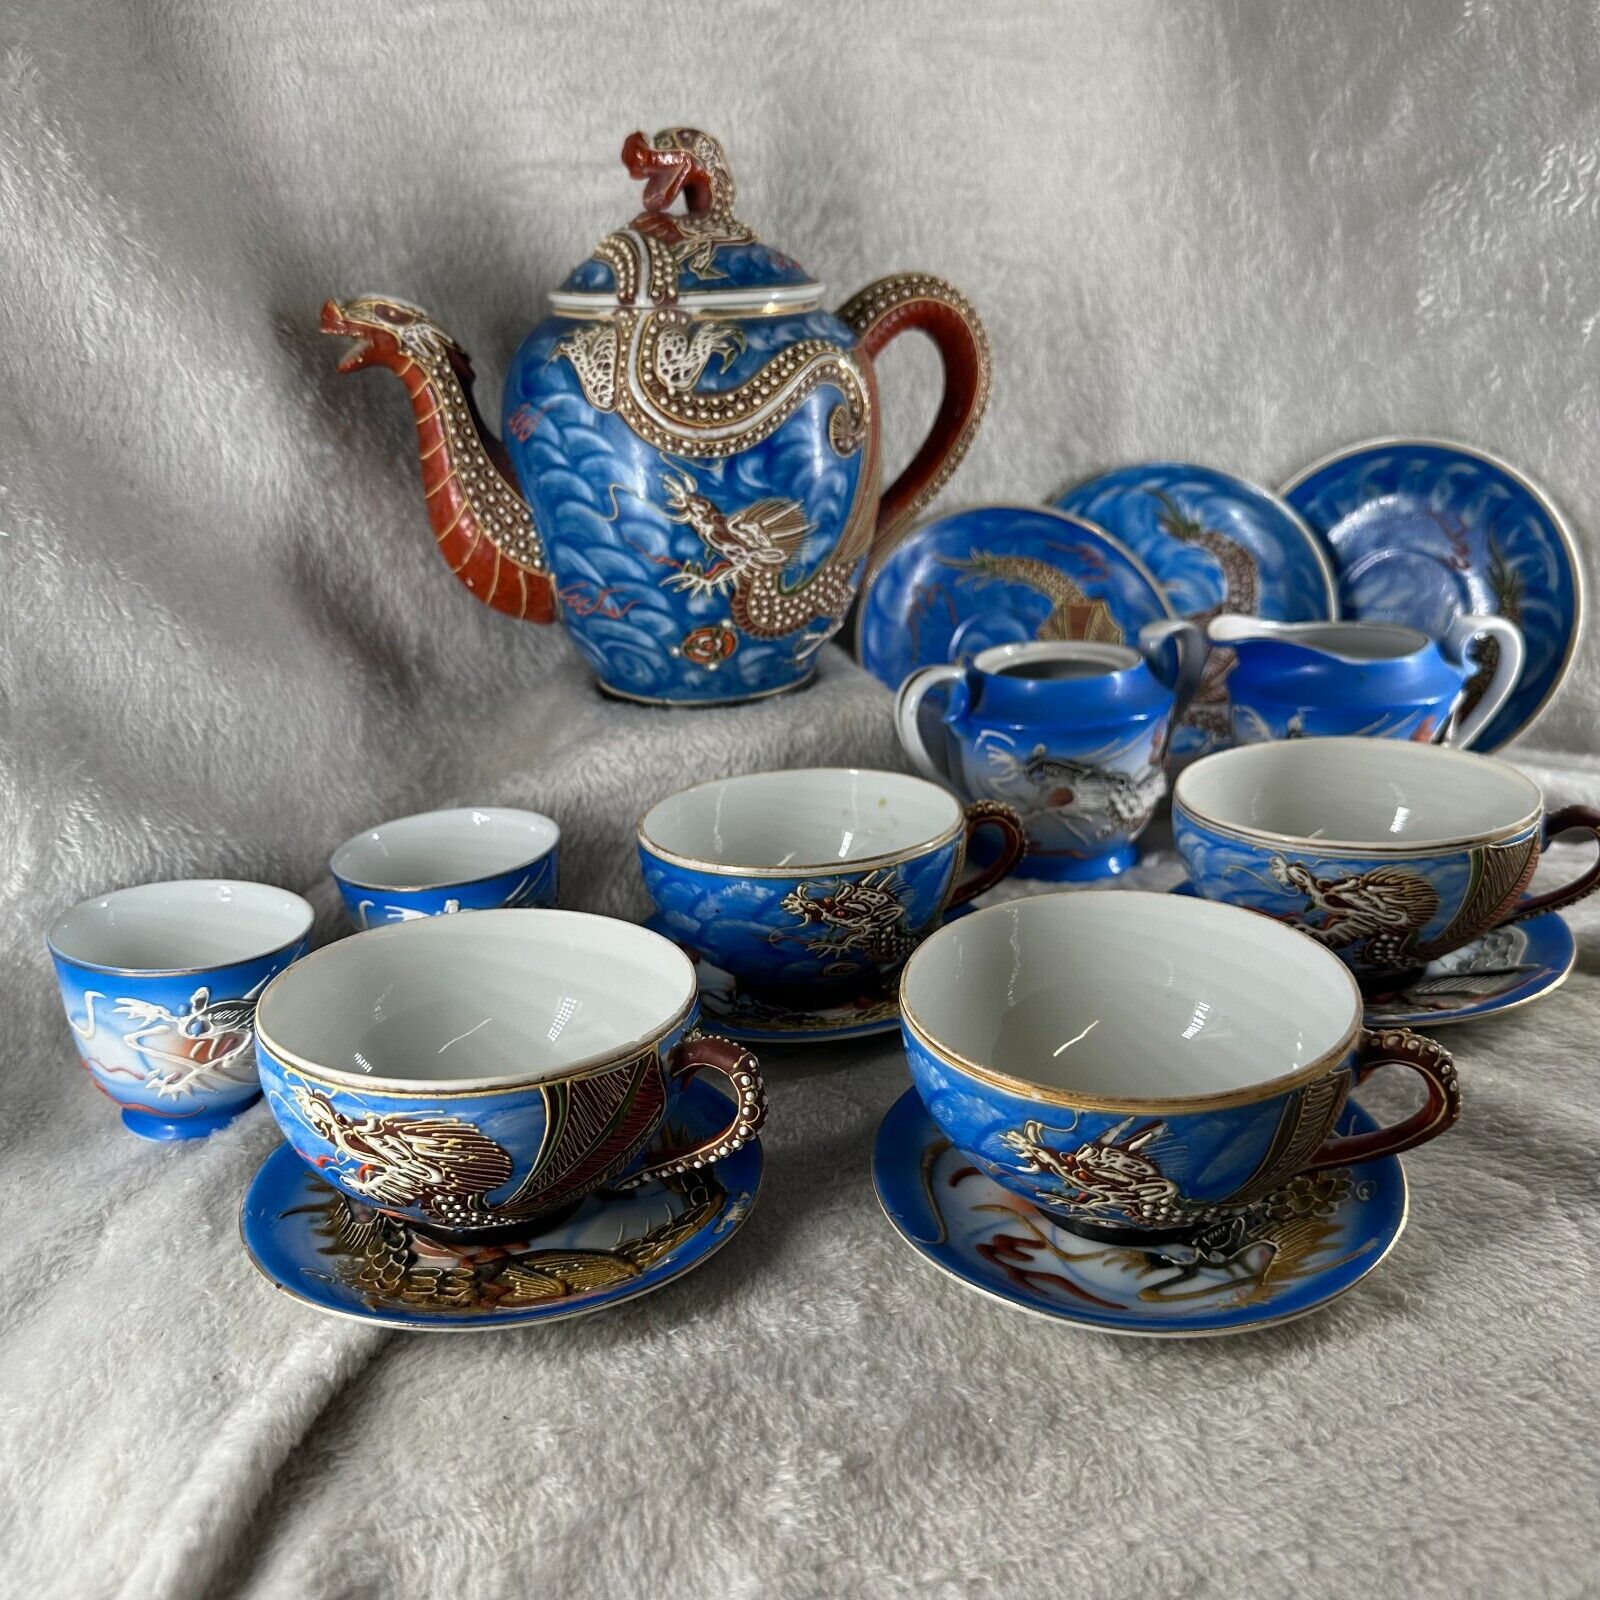 Blue Dragon Ware Kutani Moriage Lithophane Tea Set With Cups, Plates and More